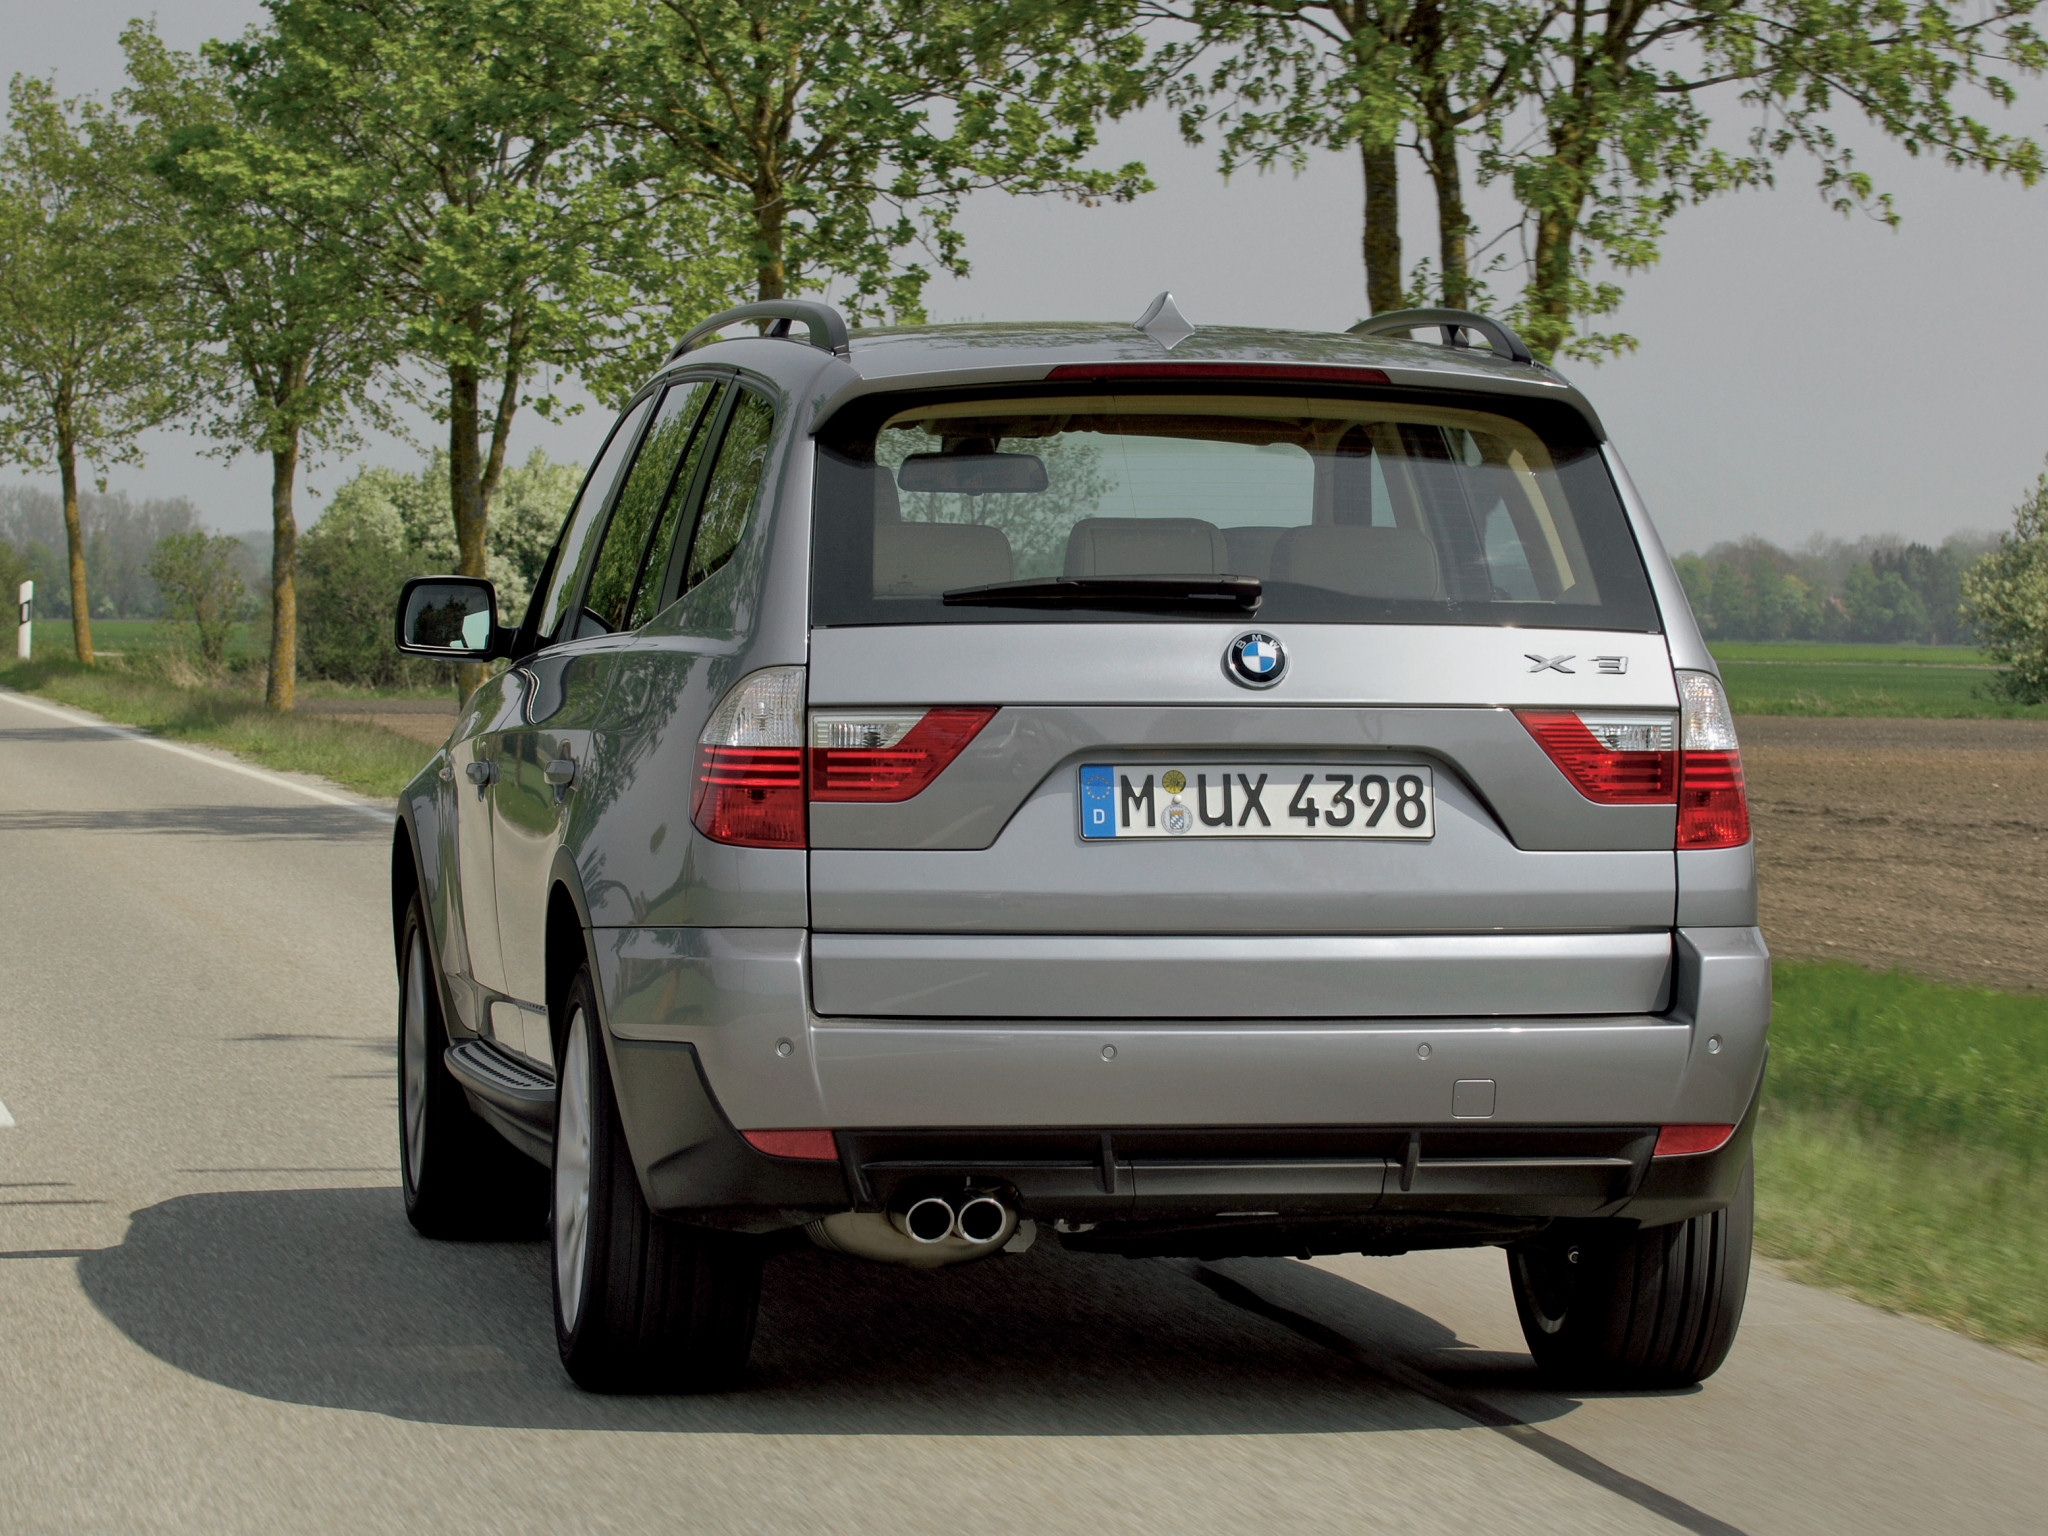 Fichier:BMW X3 (E83) Facelift rear 20100926.jpg — Wikipédia